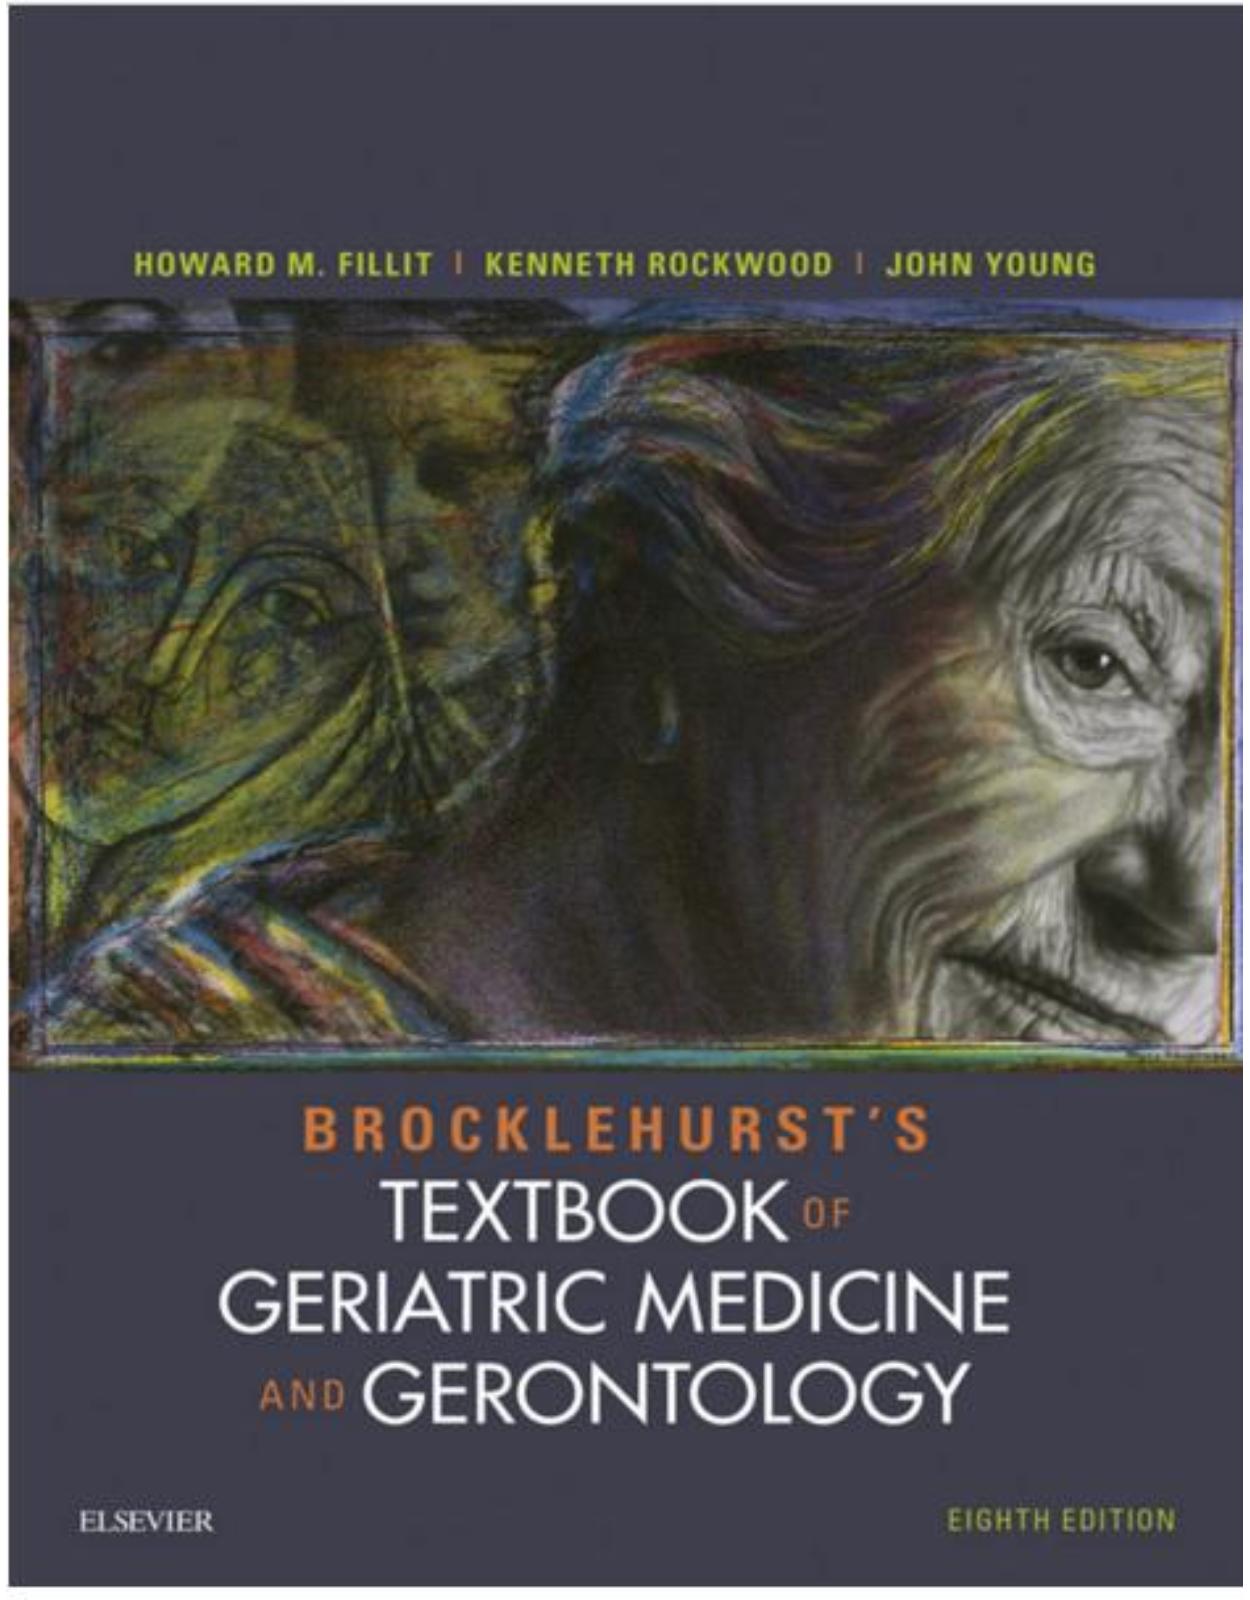 Brocklehurst's Textbook of Geriatric Medicine and Gerontology, 8th Edition 